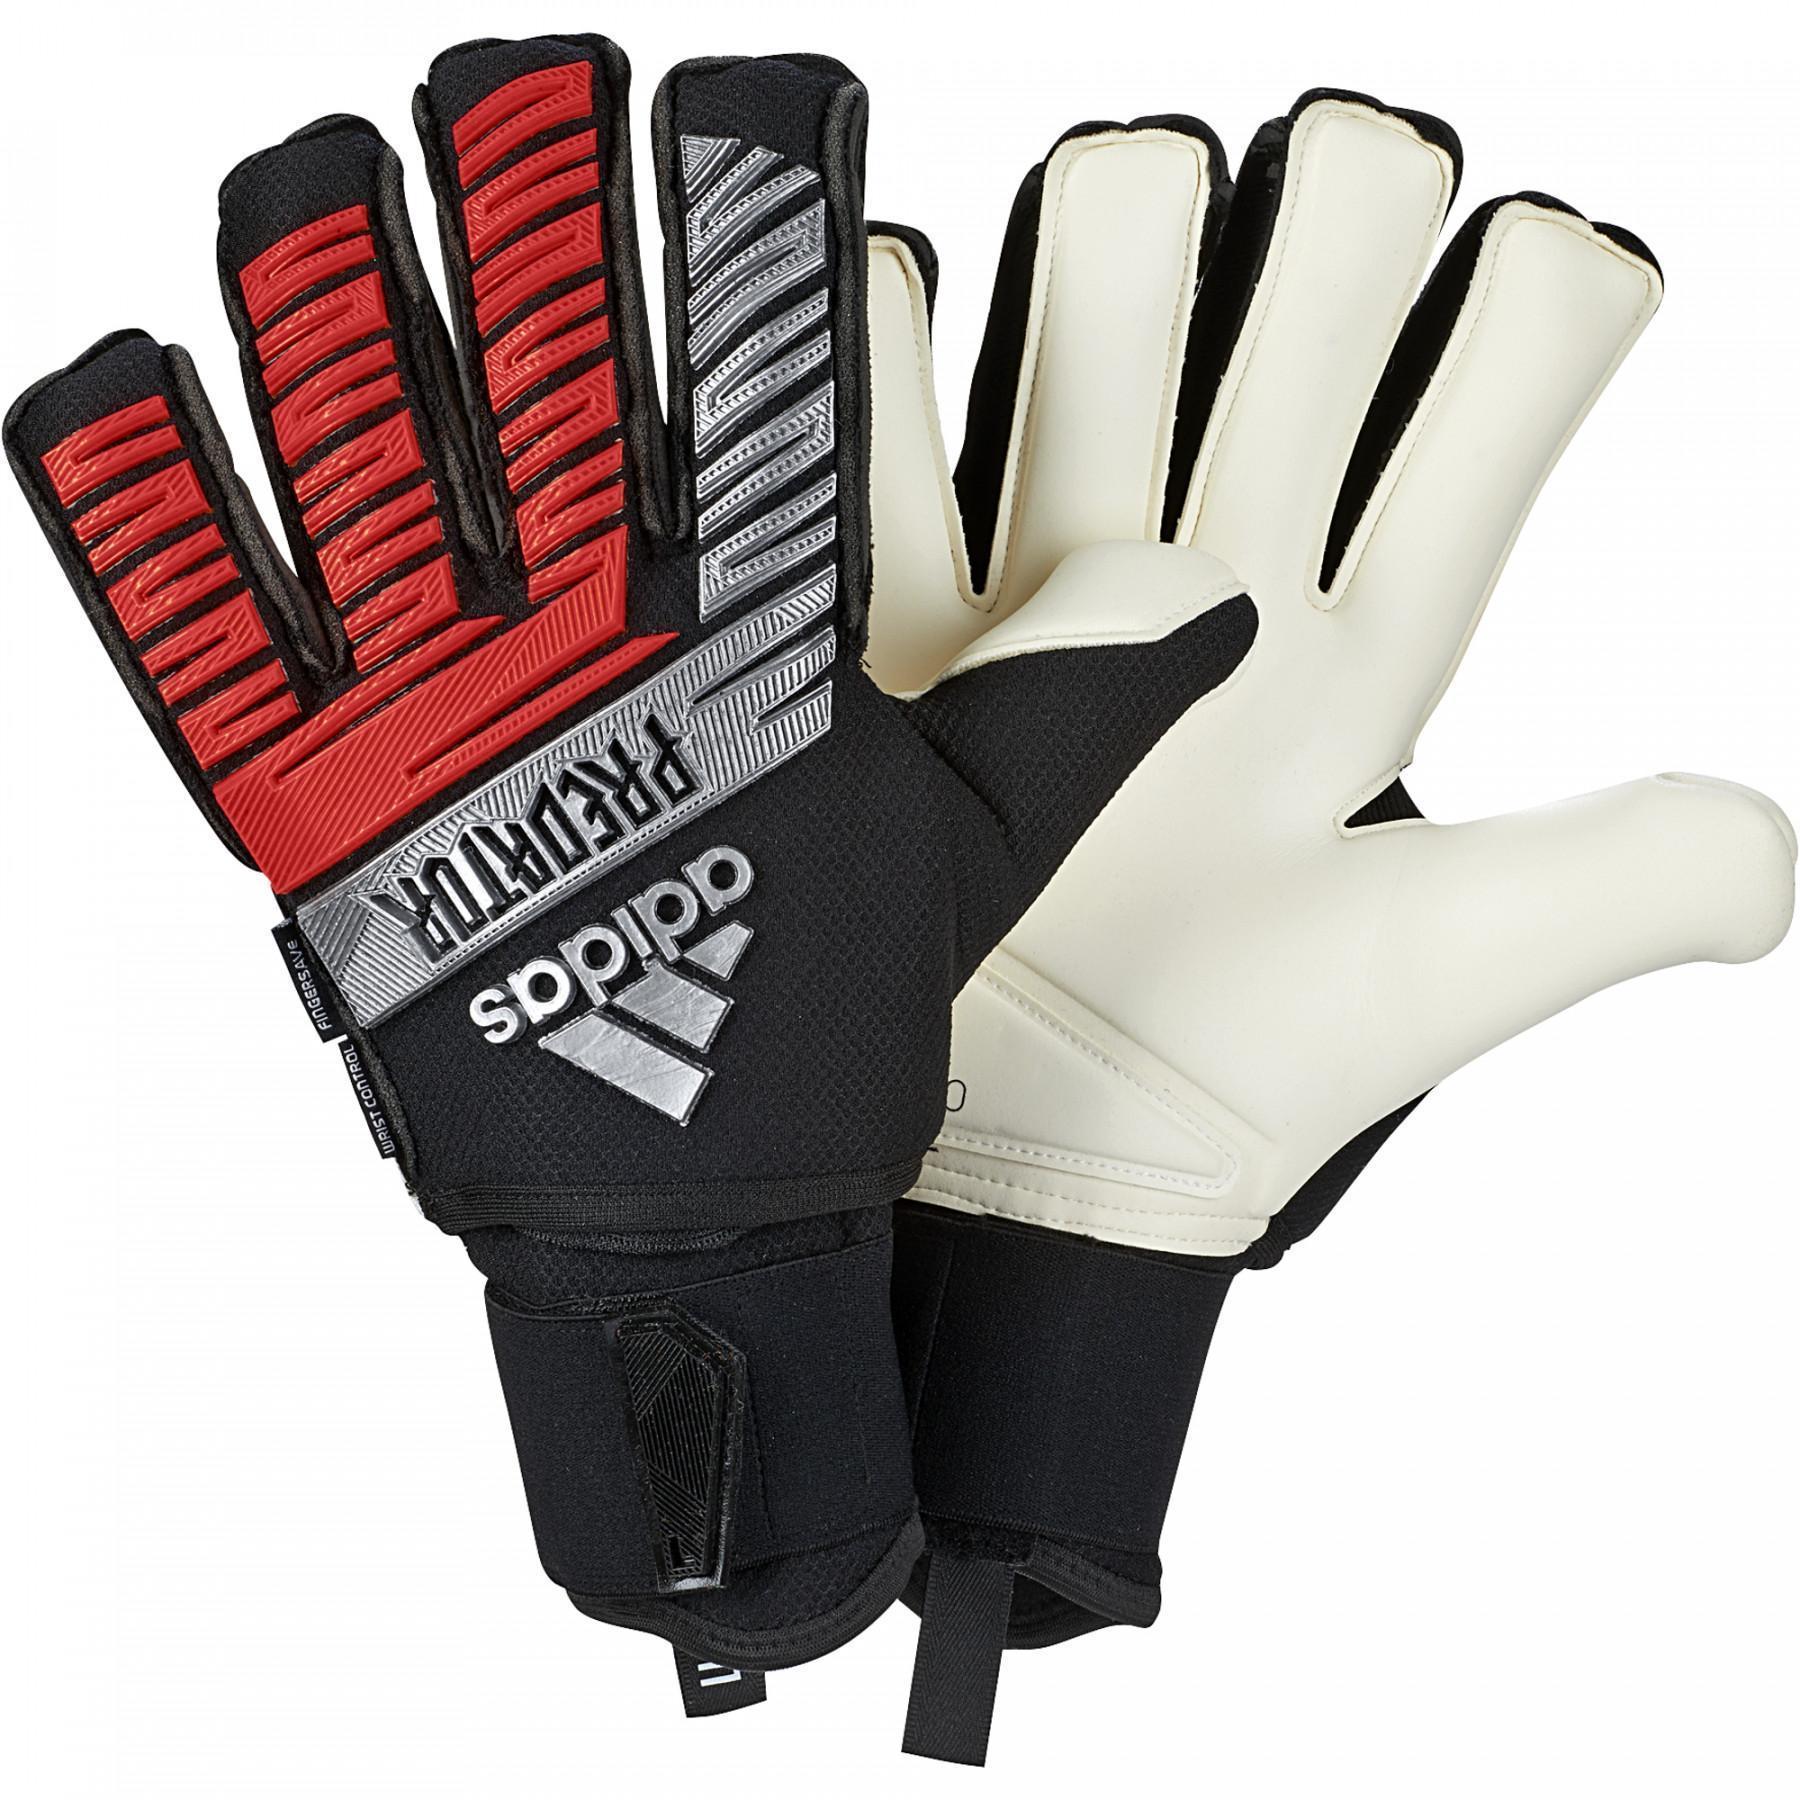 Goalkeeper gloves adidas Predator Ultimate